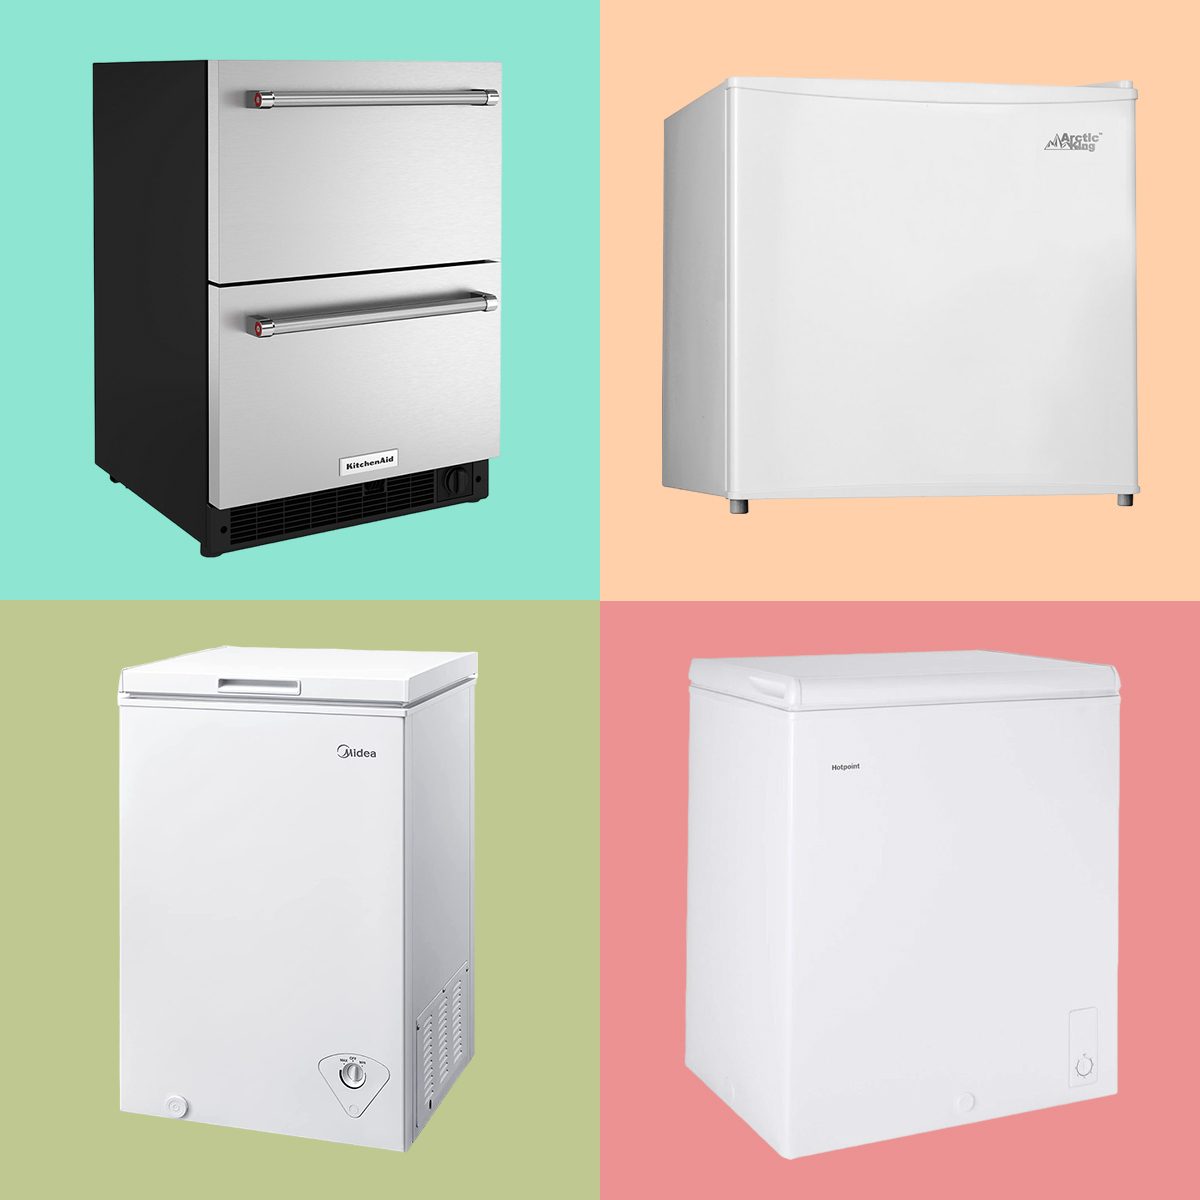 Wanai Chest Freezer 3.5 Cu Ft,Small Chest Freezer,Upright Single Door Refrigerator,Black, Size: 3.5 Cu.Ft.